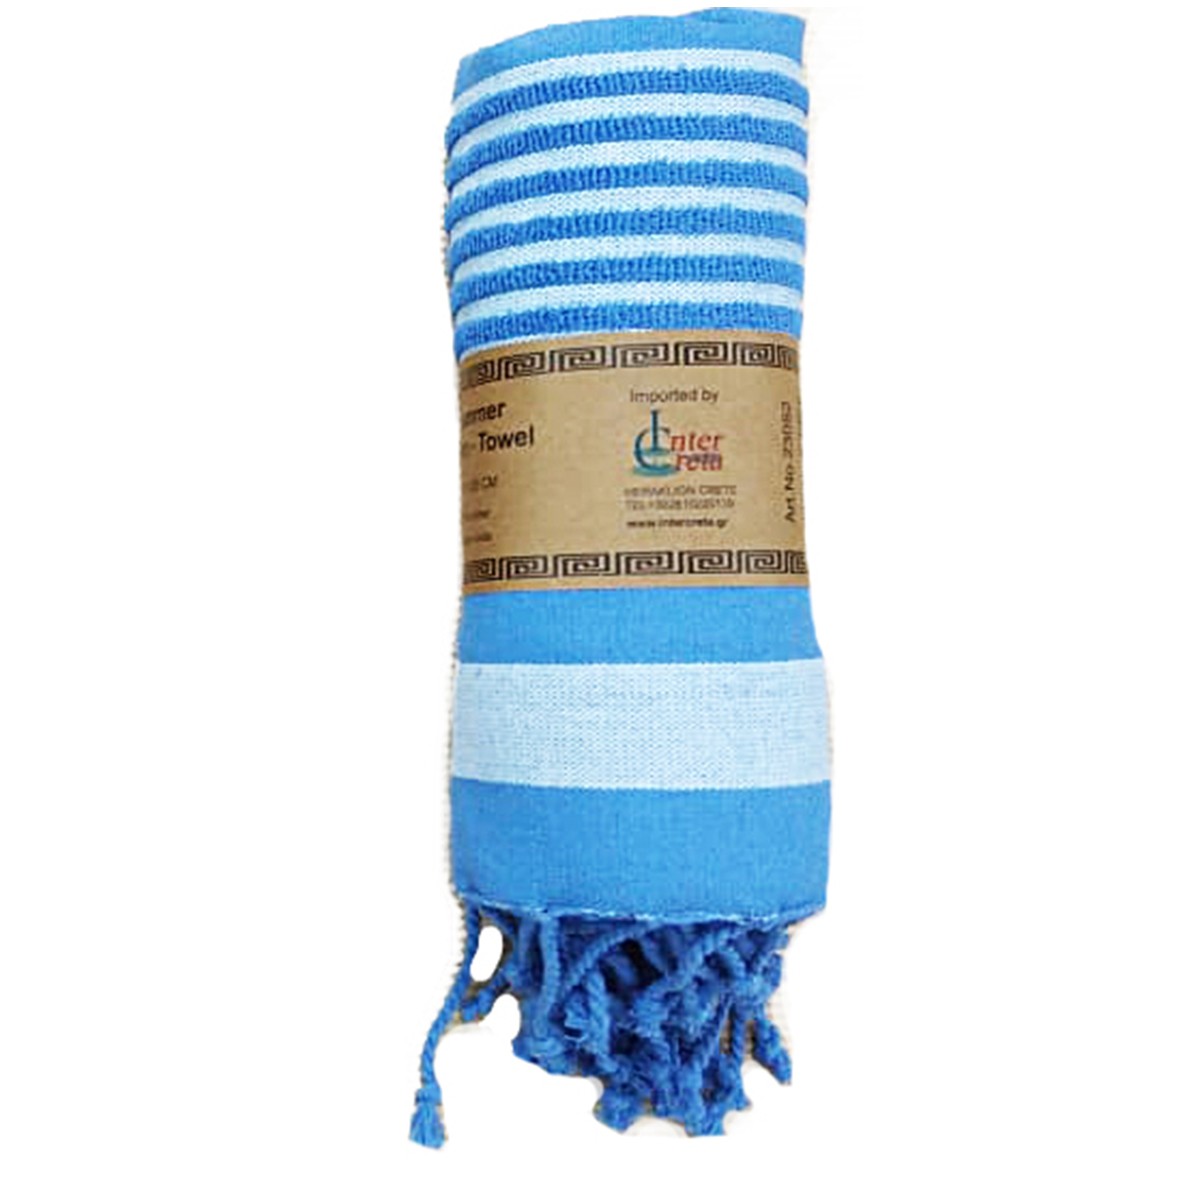 towel 23052 light blue